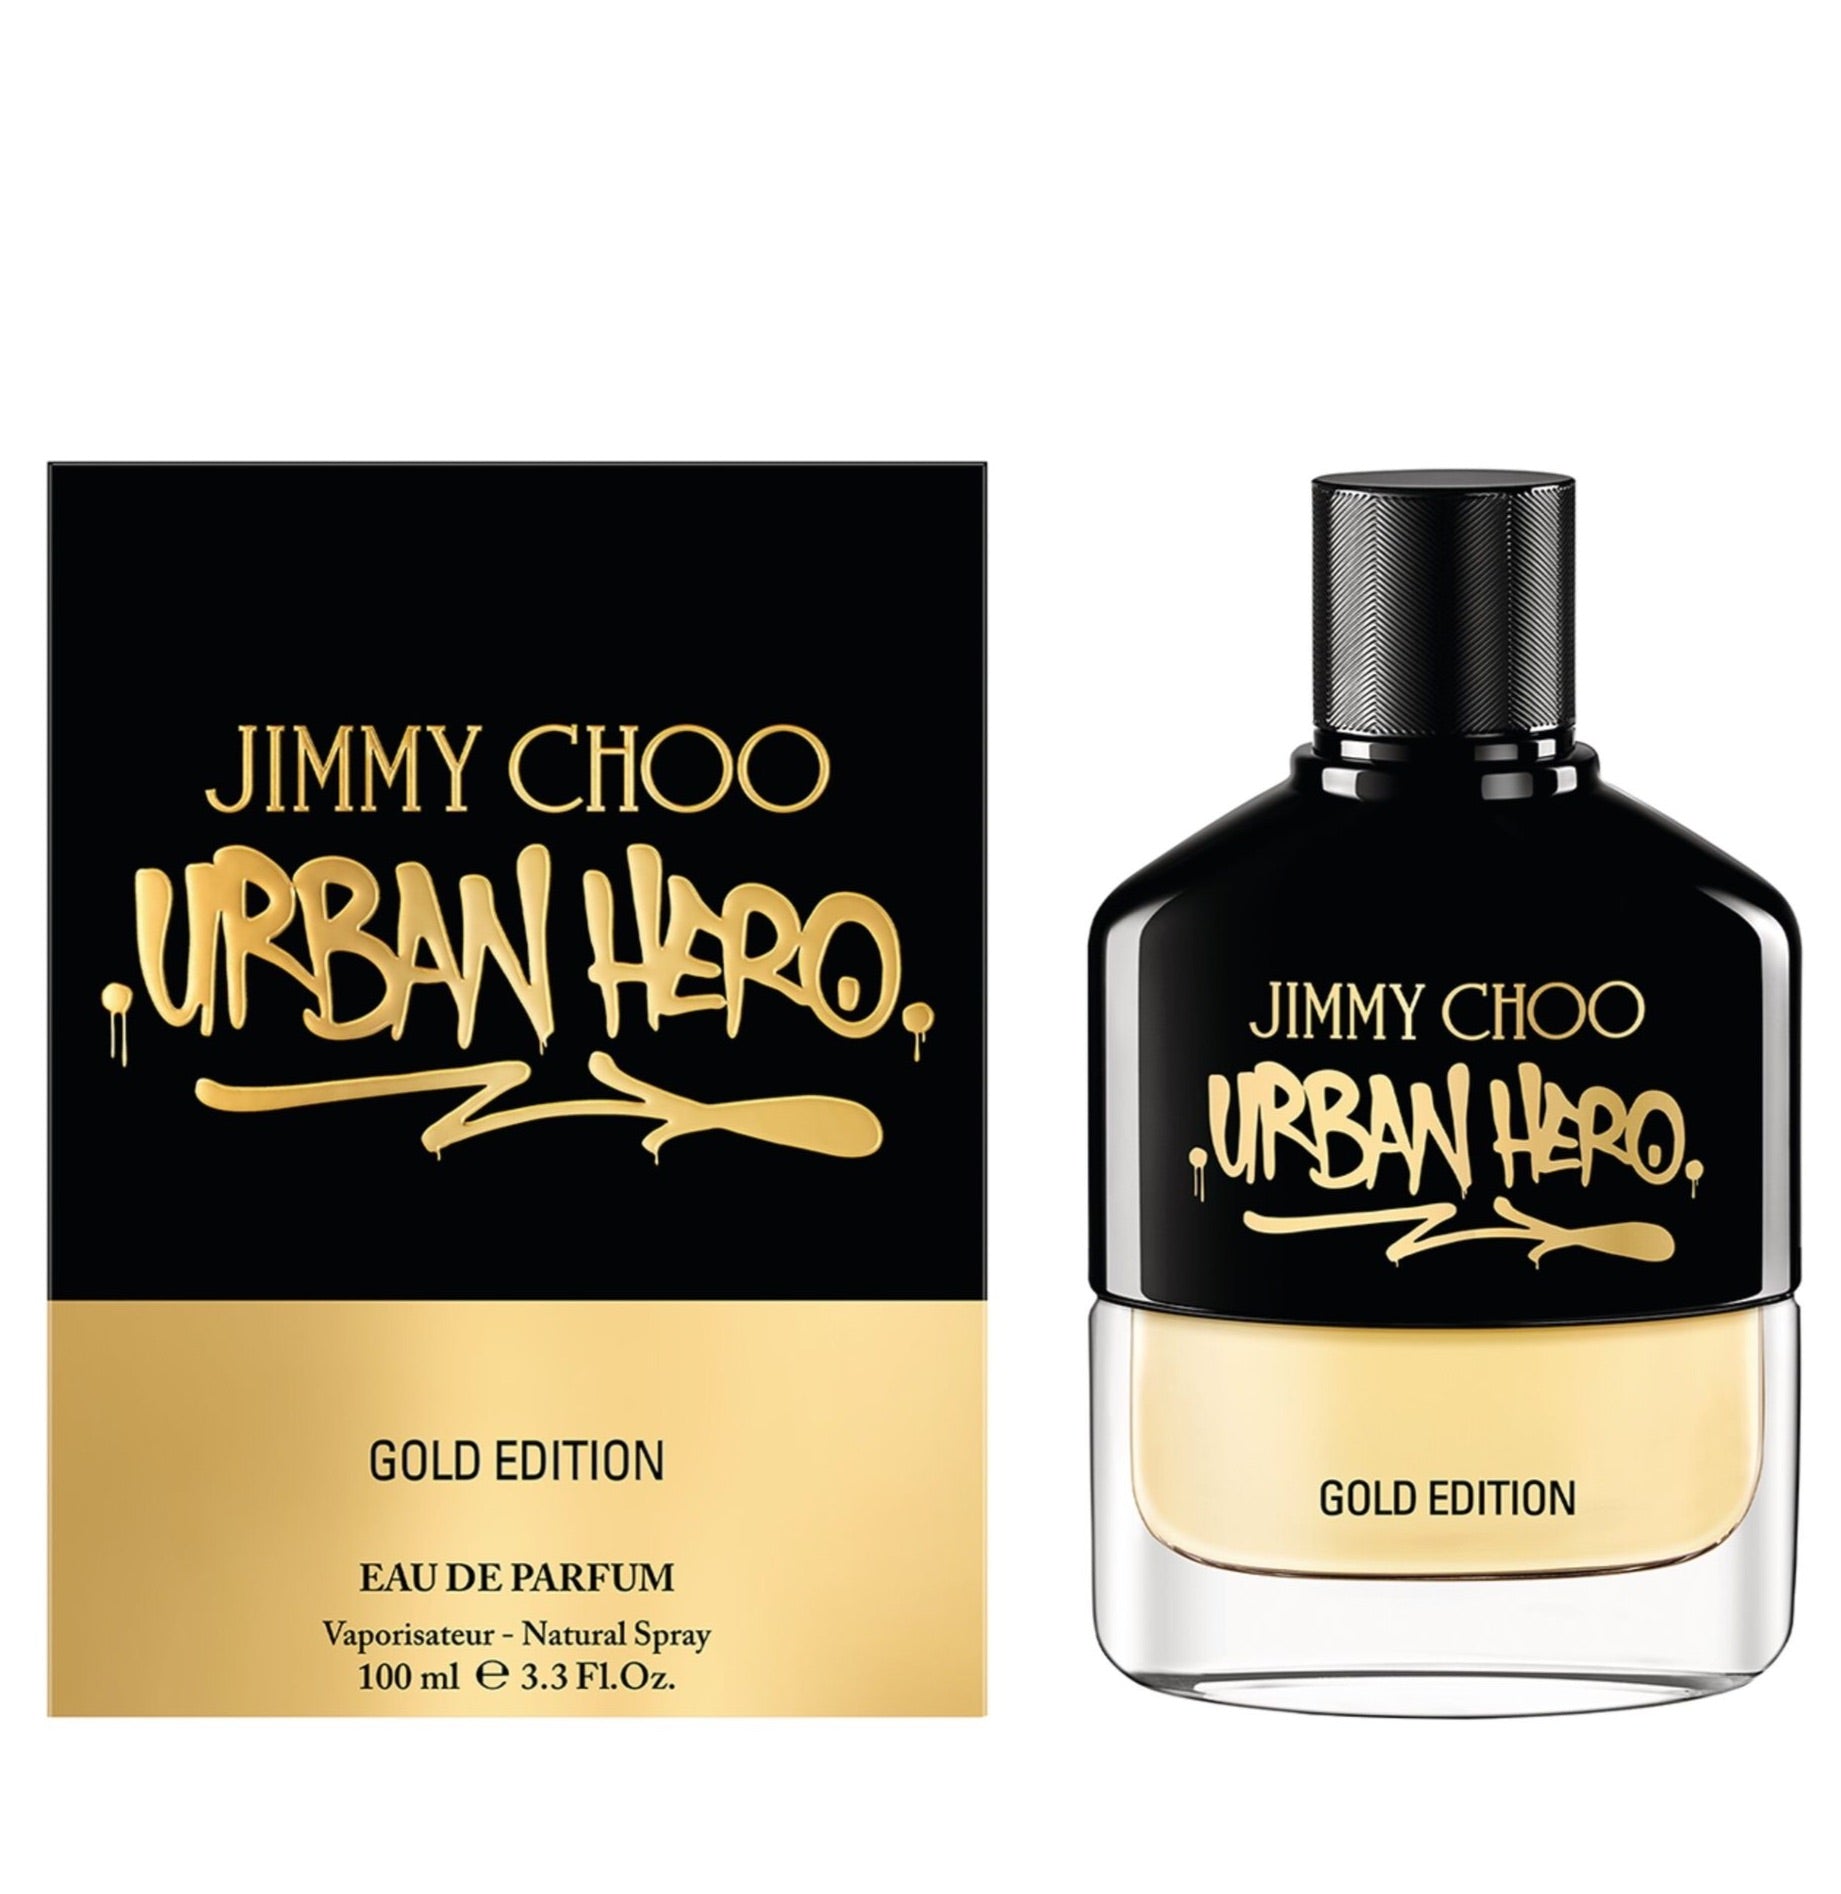 JIMMY CHOO URBAN HERO GOLD EDITION